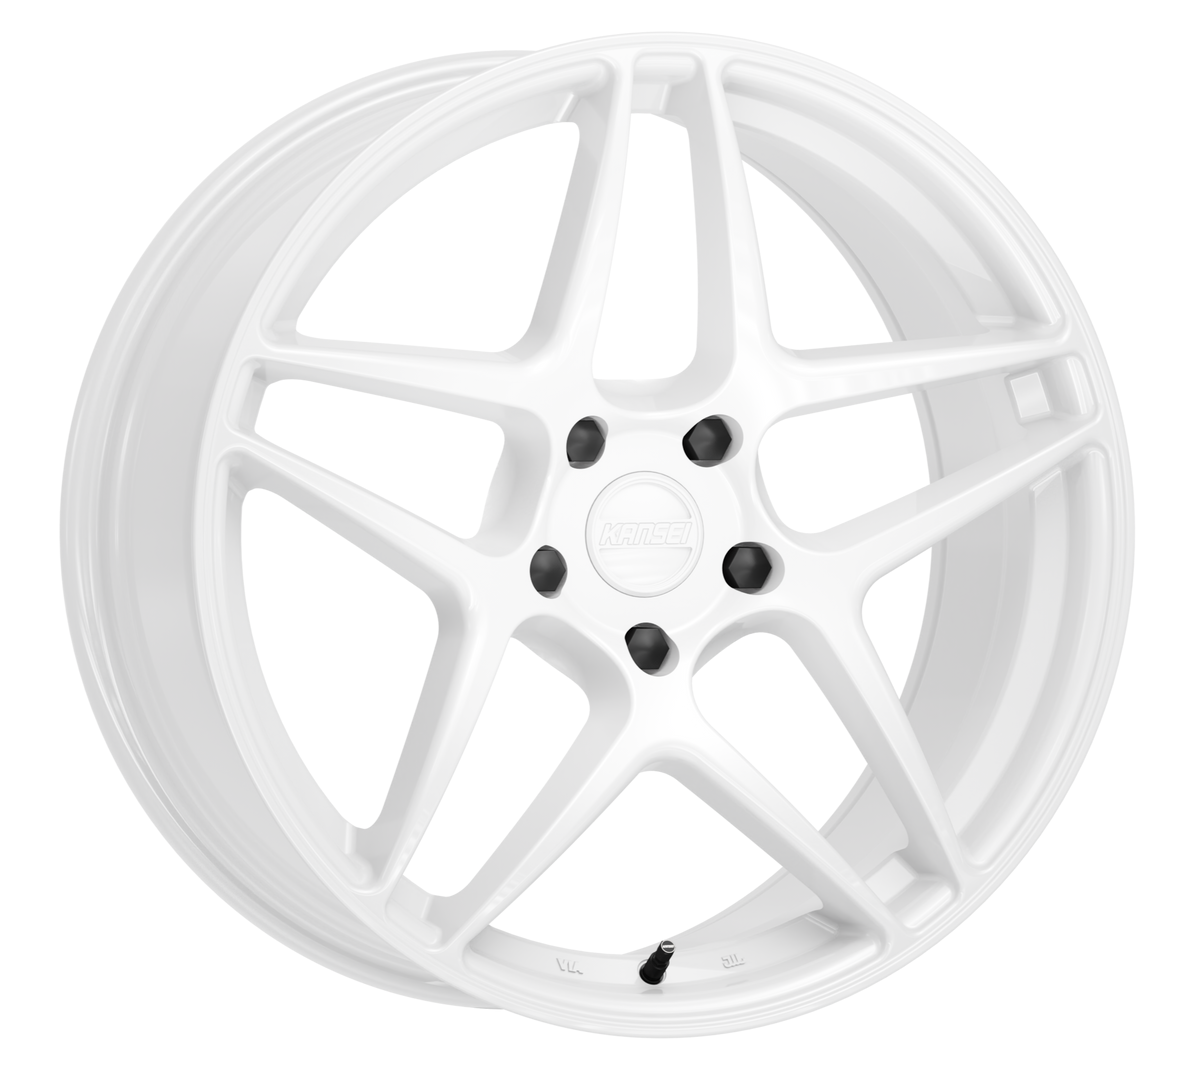 K15W ASTRO Wheel, Size: 19" x 9.50", Bolt Pattern: 5 x 120 mm, Backspace: 6.63" [Finish: Gloss White]